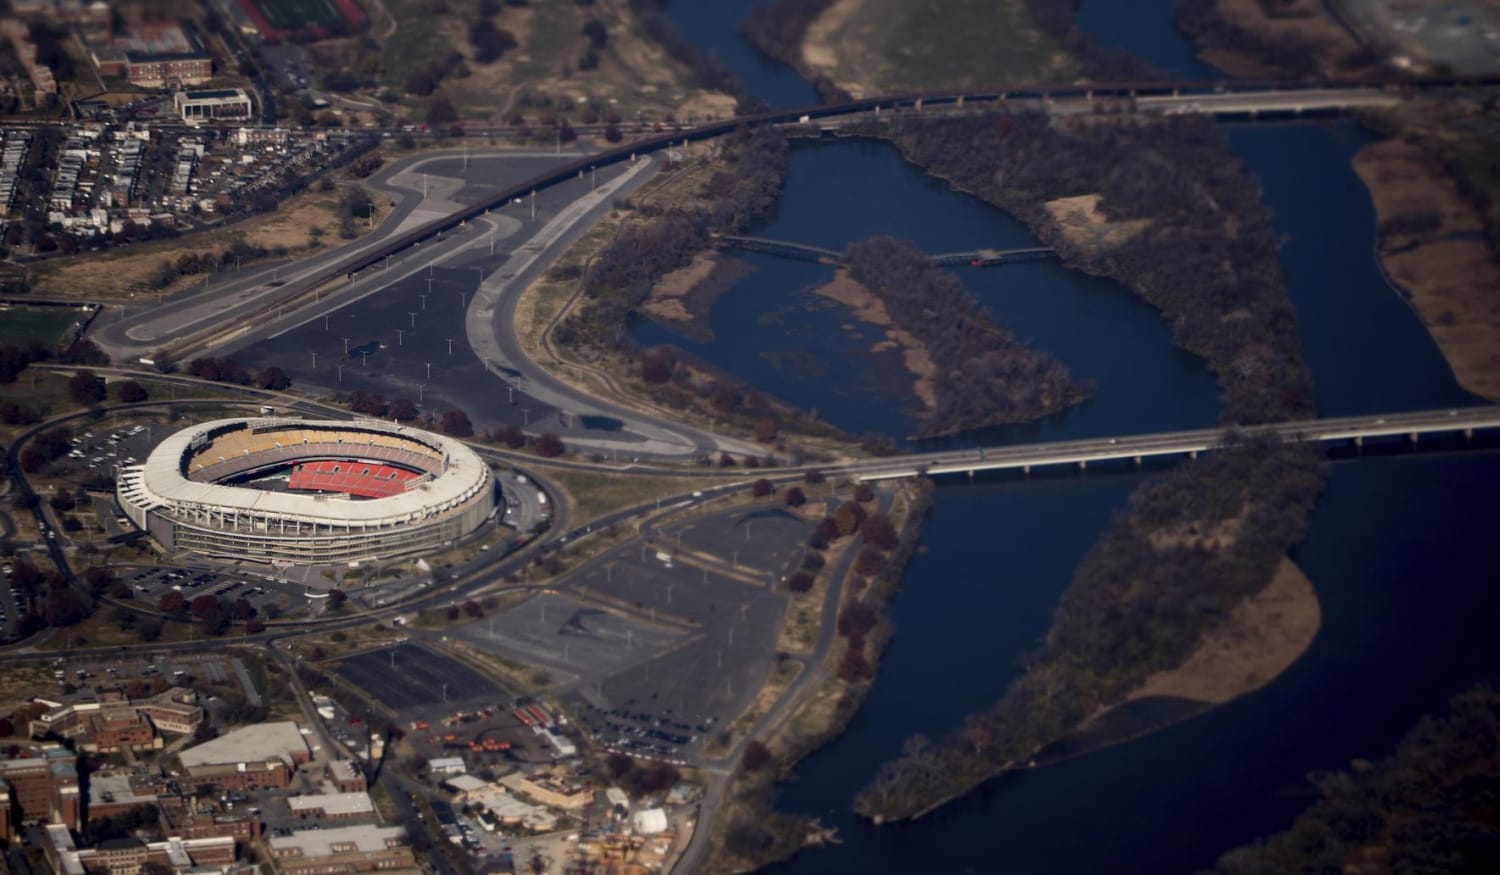 D.C. planning to tear down RFK Stadium in 2021